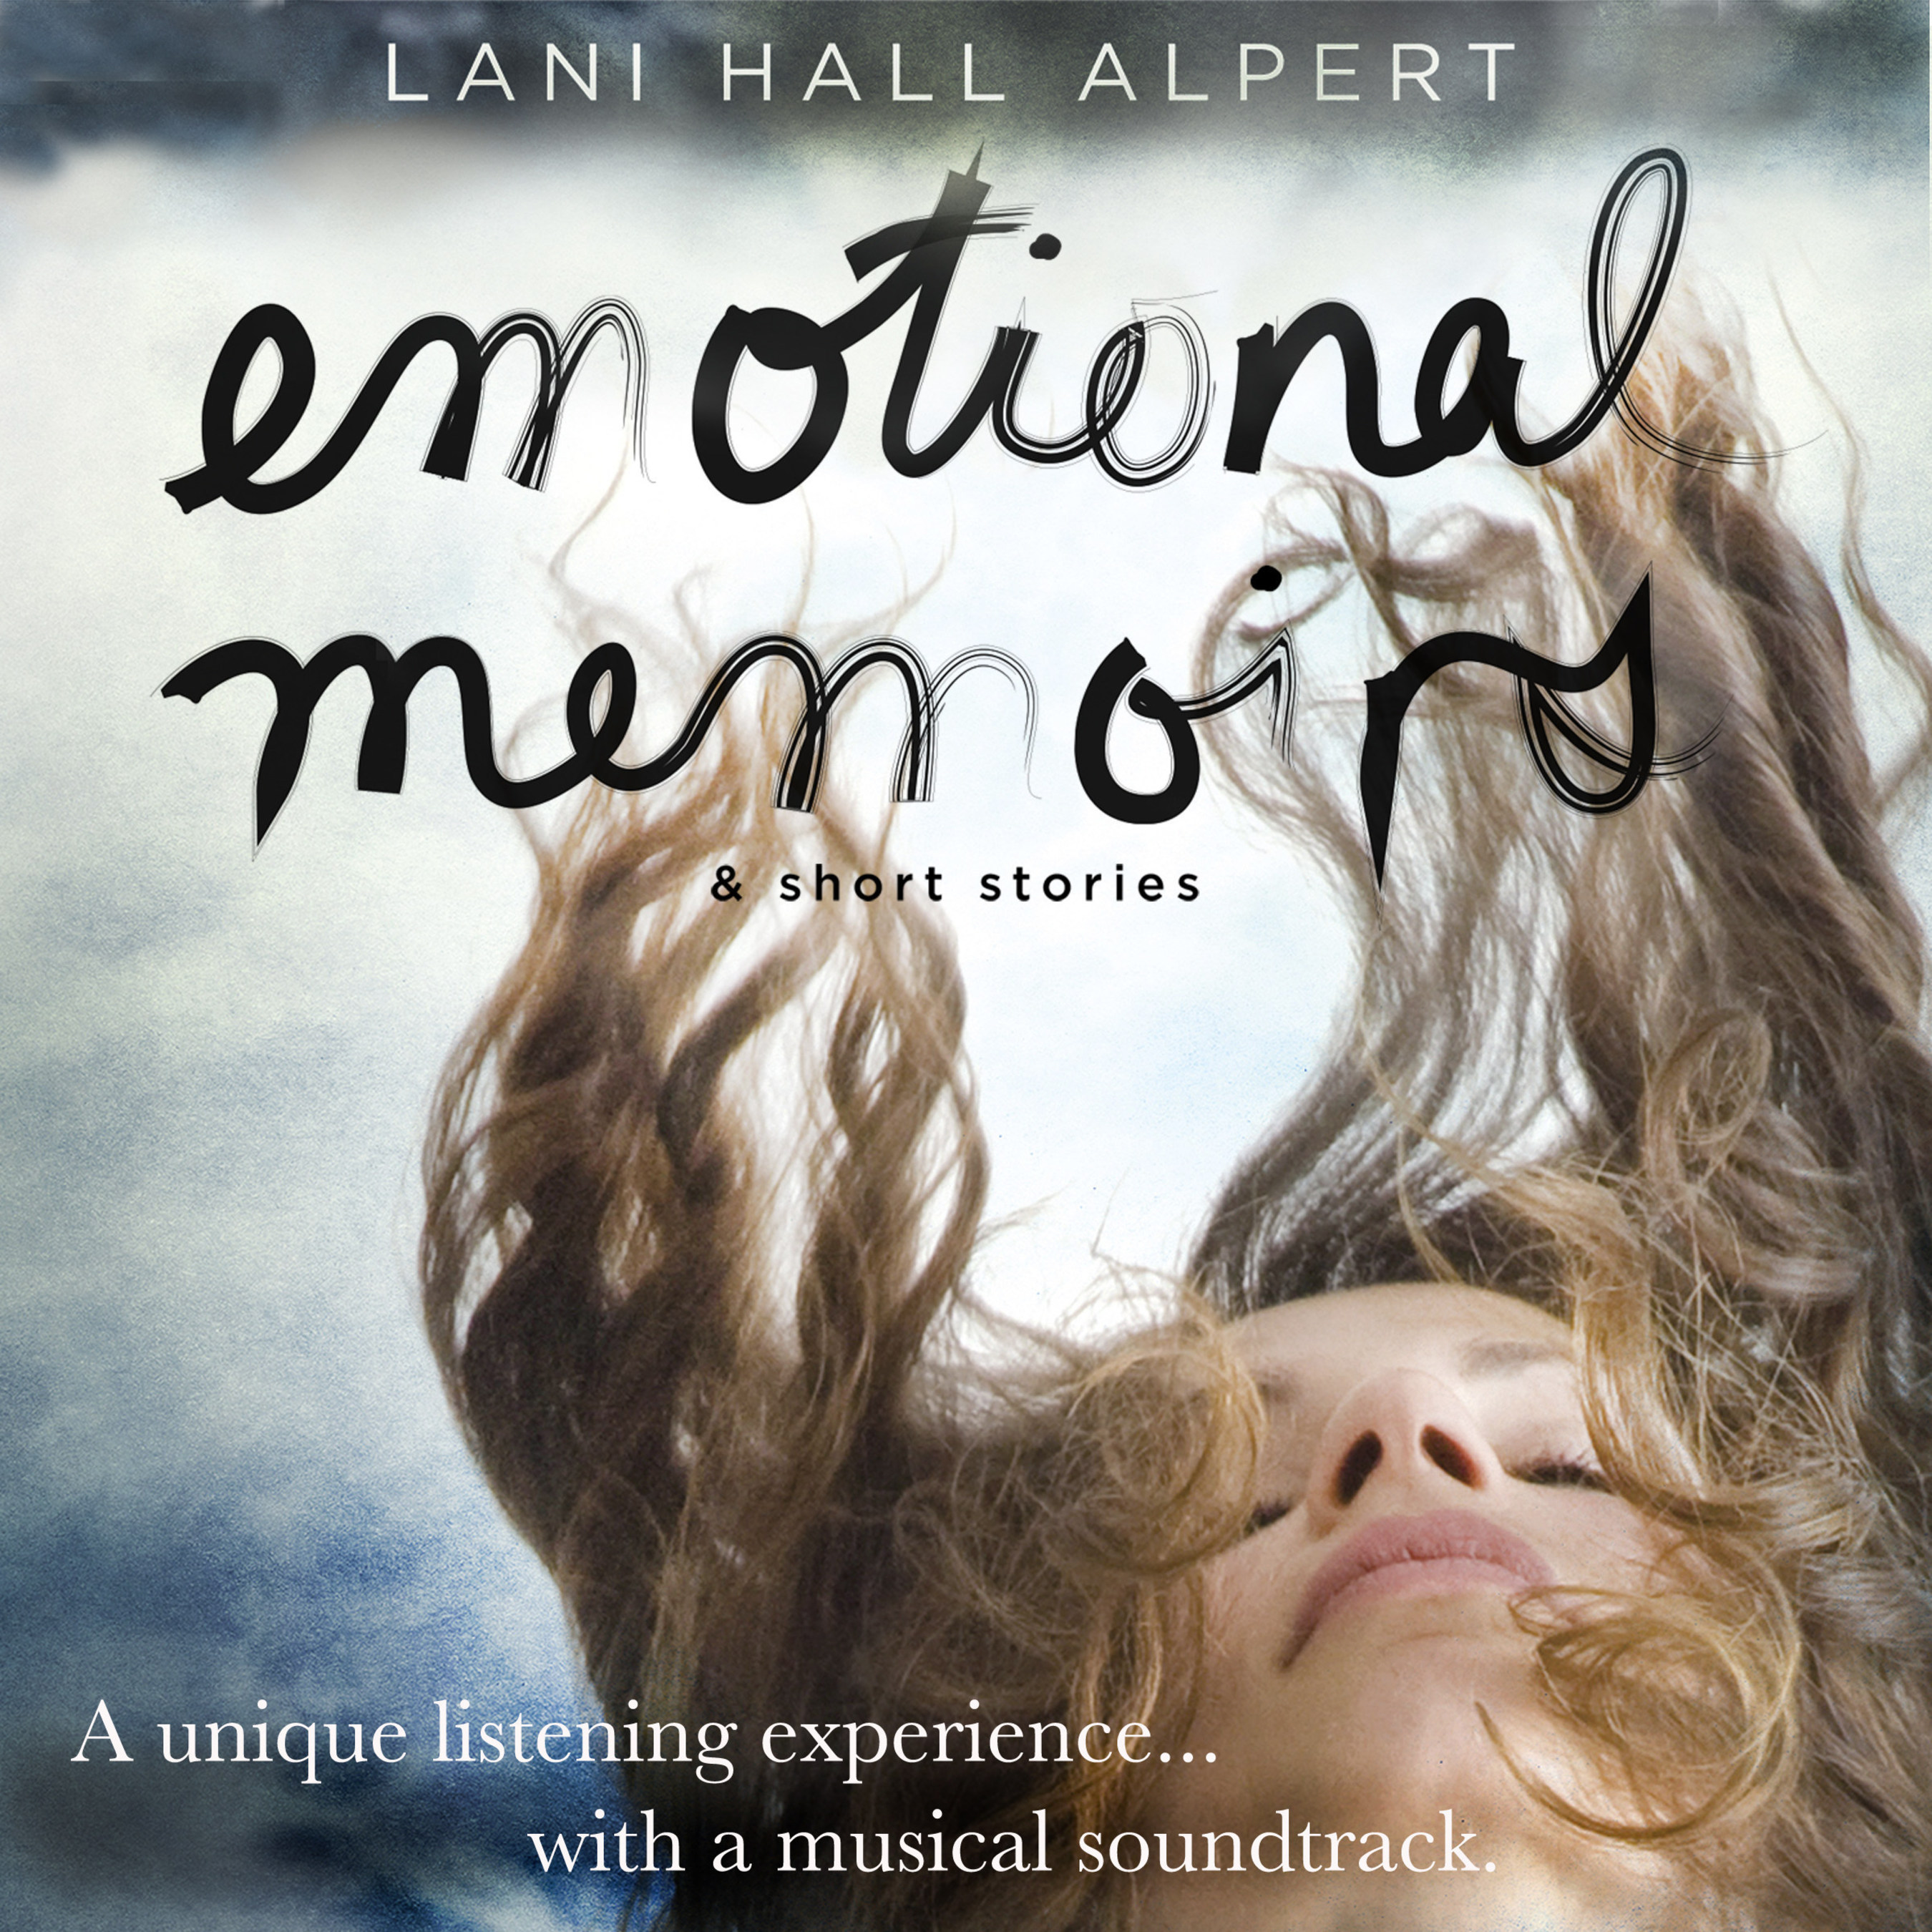 "Emotional Memoirs & Short Stories" by Lani Hall Alpert